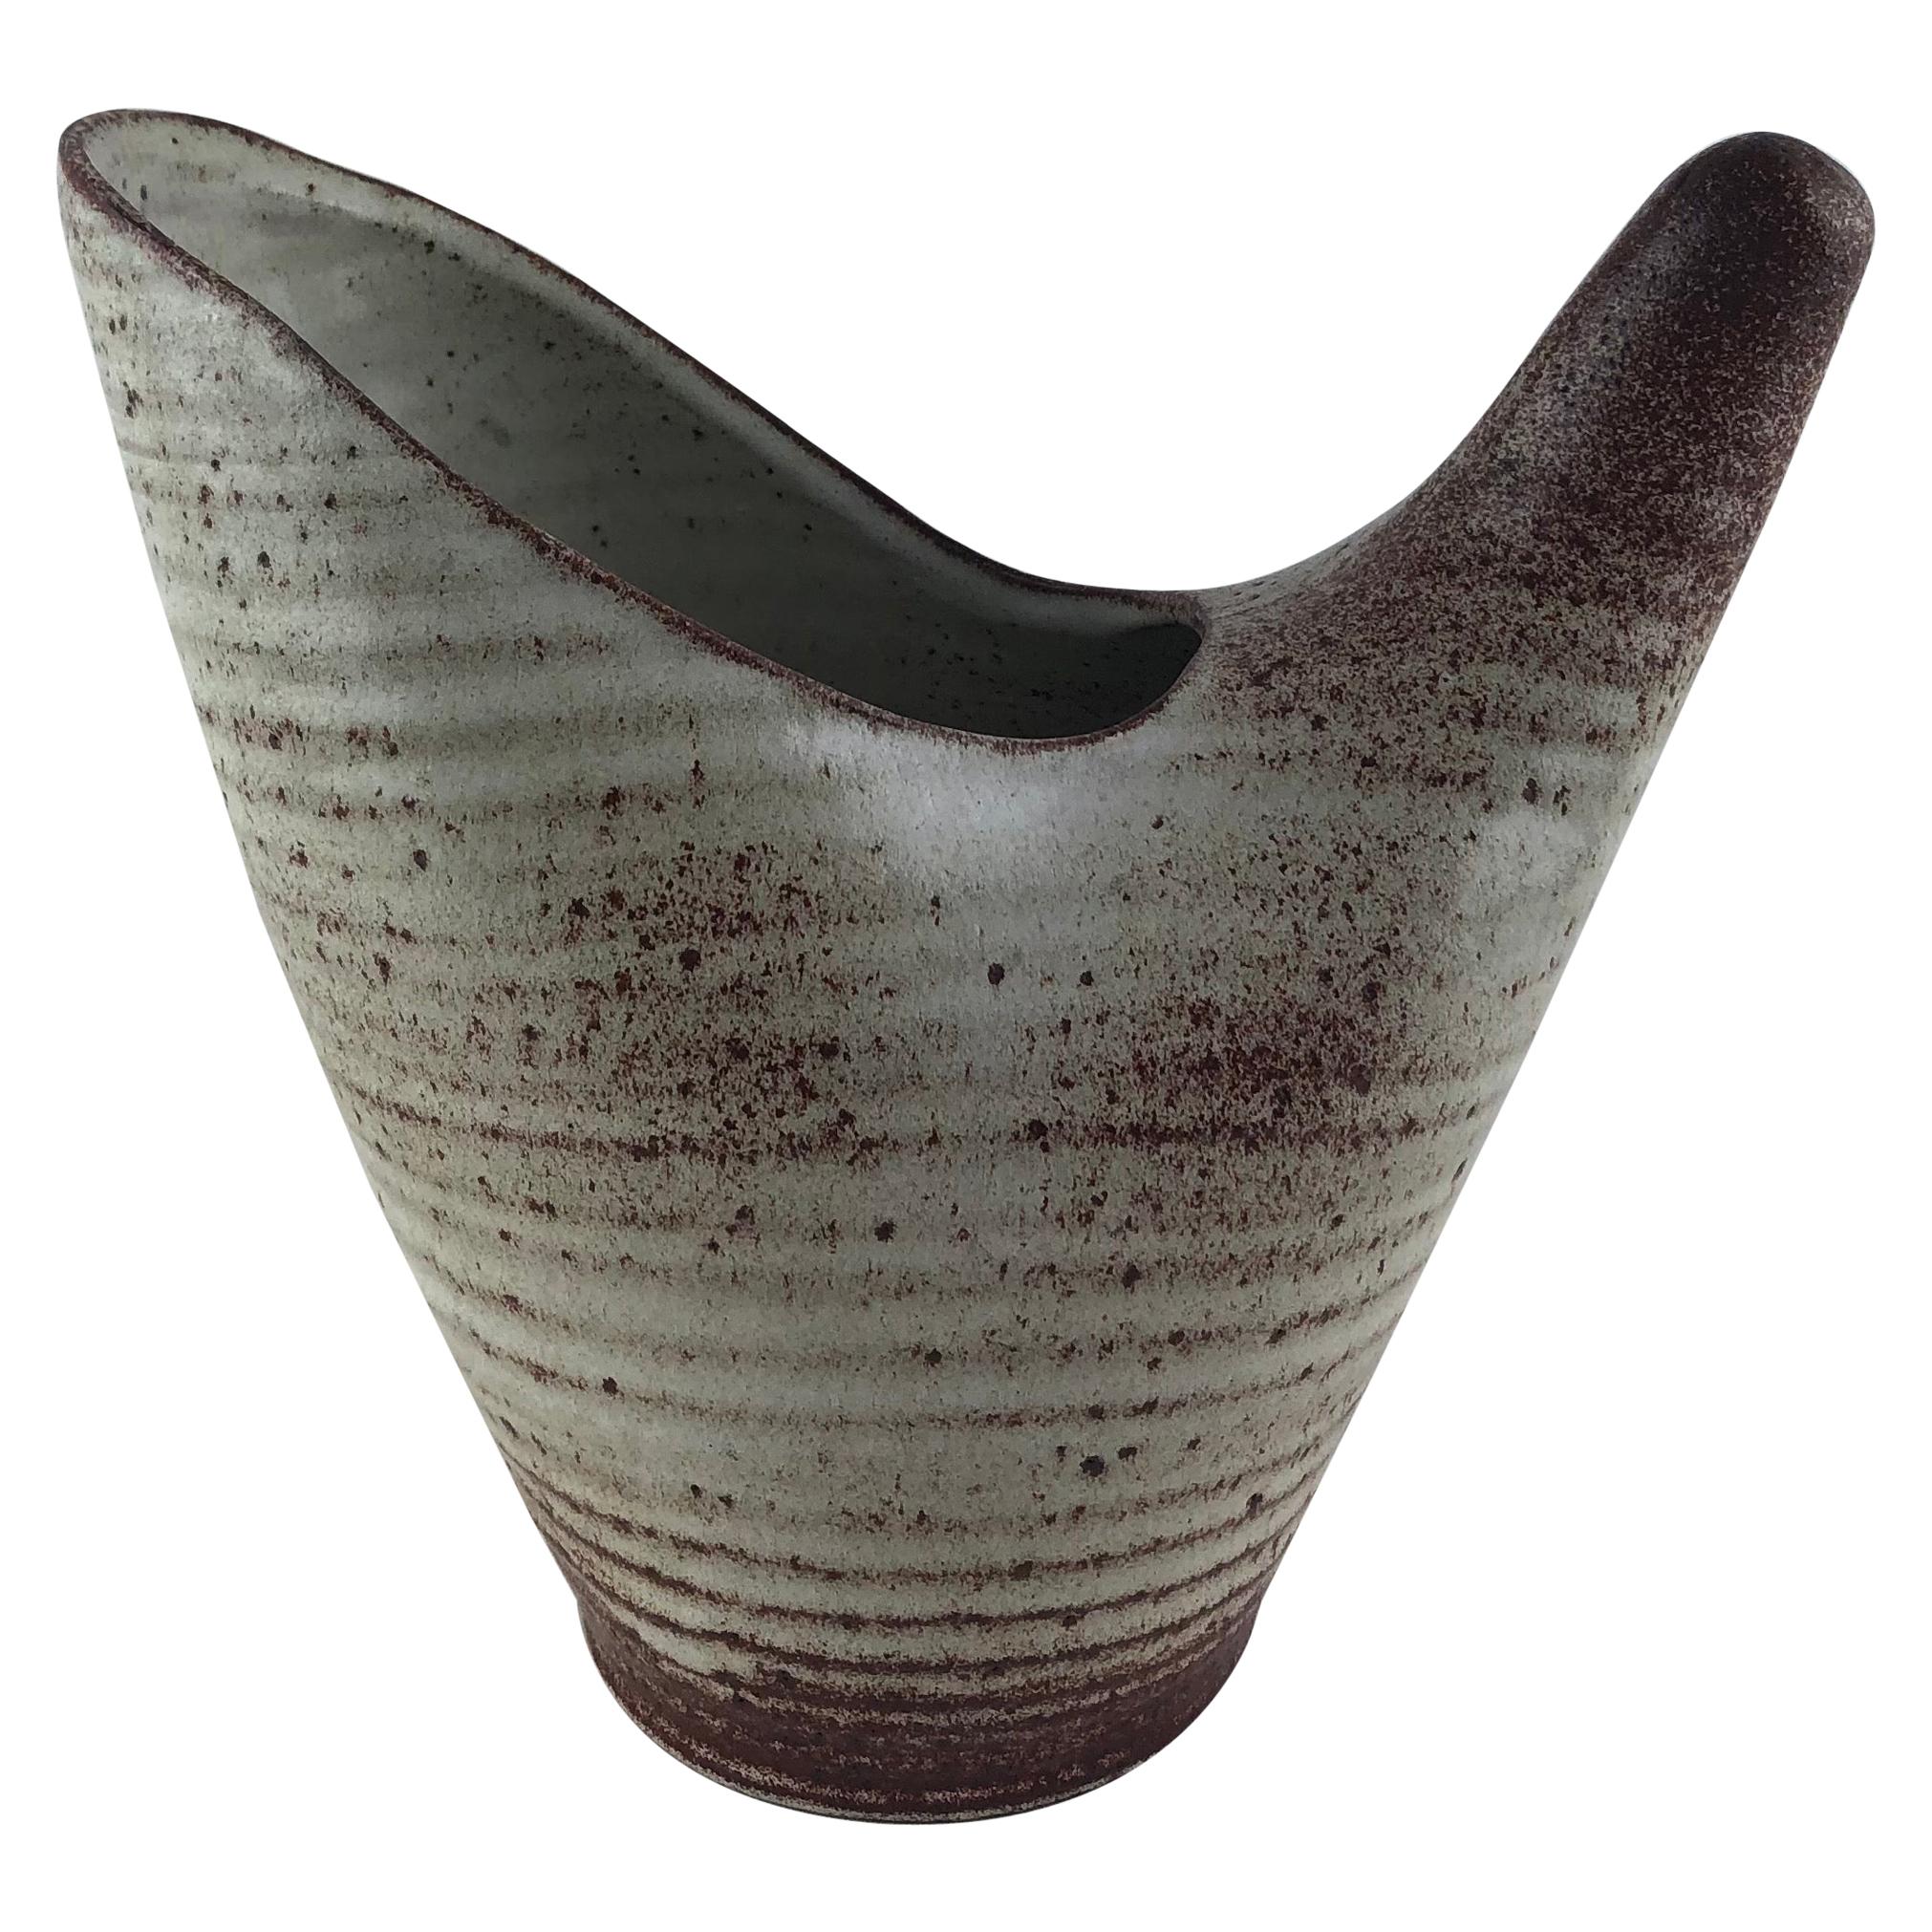 Accolay French Ceramic Vase or Vessel Manner of Alexander Kostanda